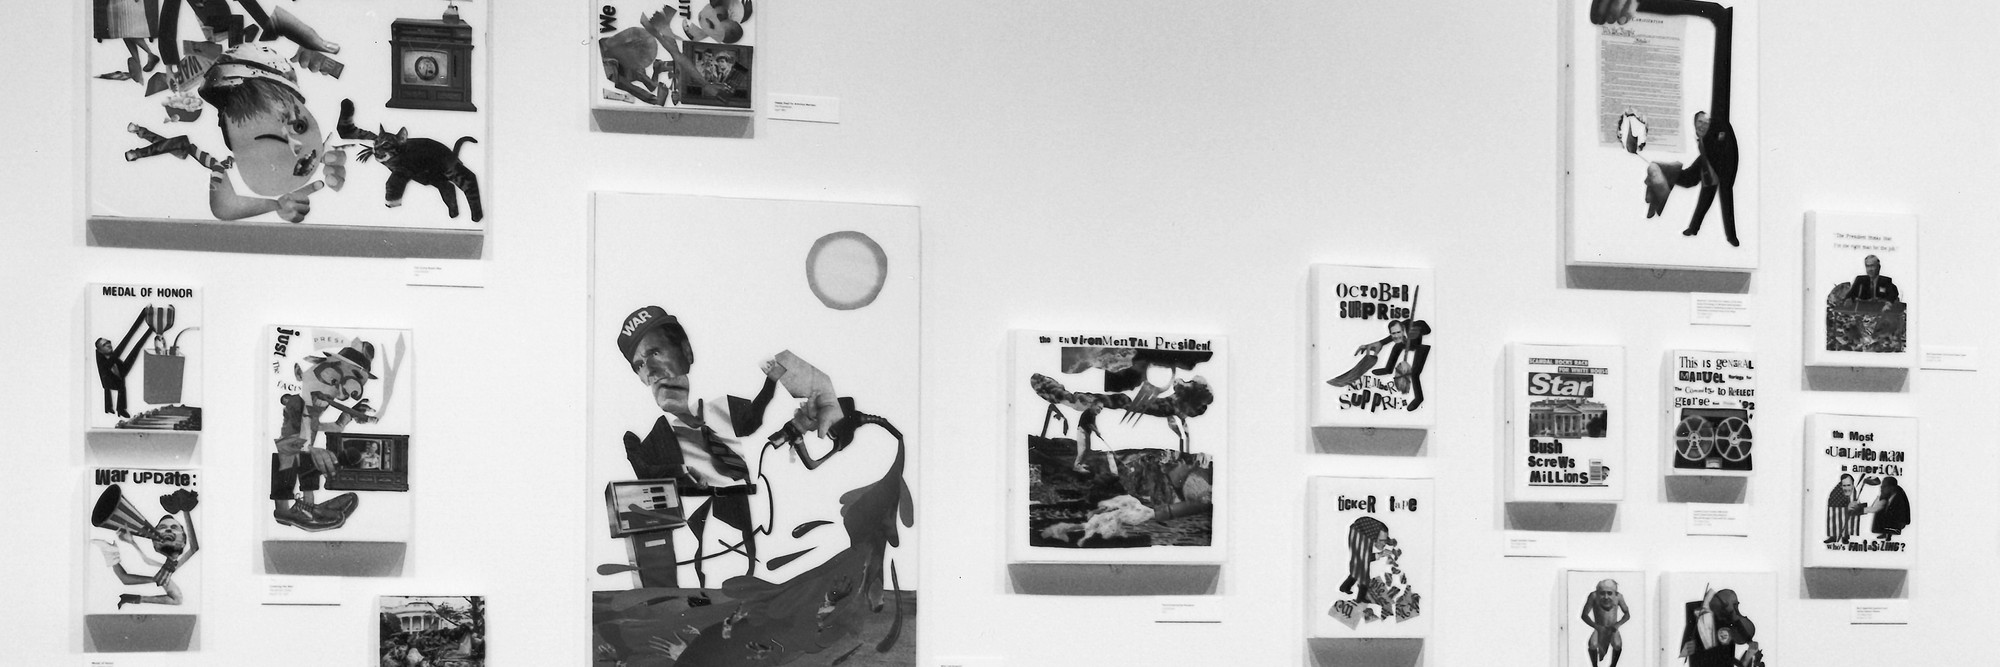 Installation view of Projects 35: Stephen Kroninger at The Museum of Modern Art, New York. Photo: Mali Olatunji